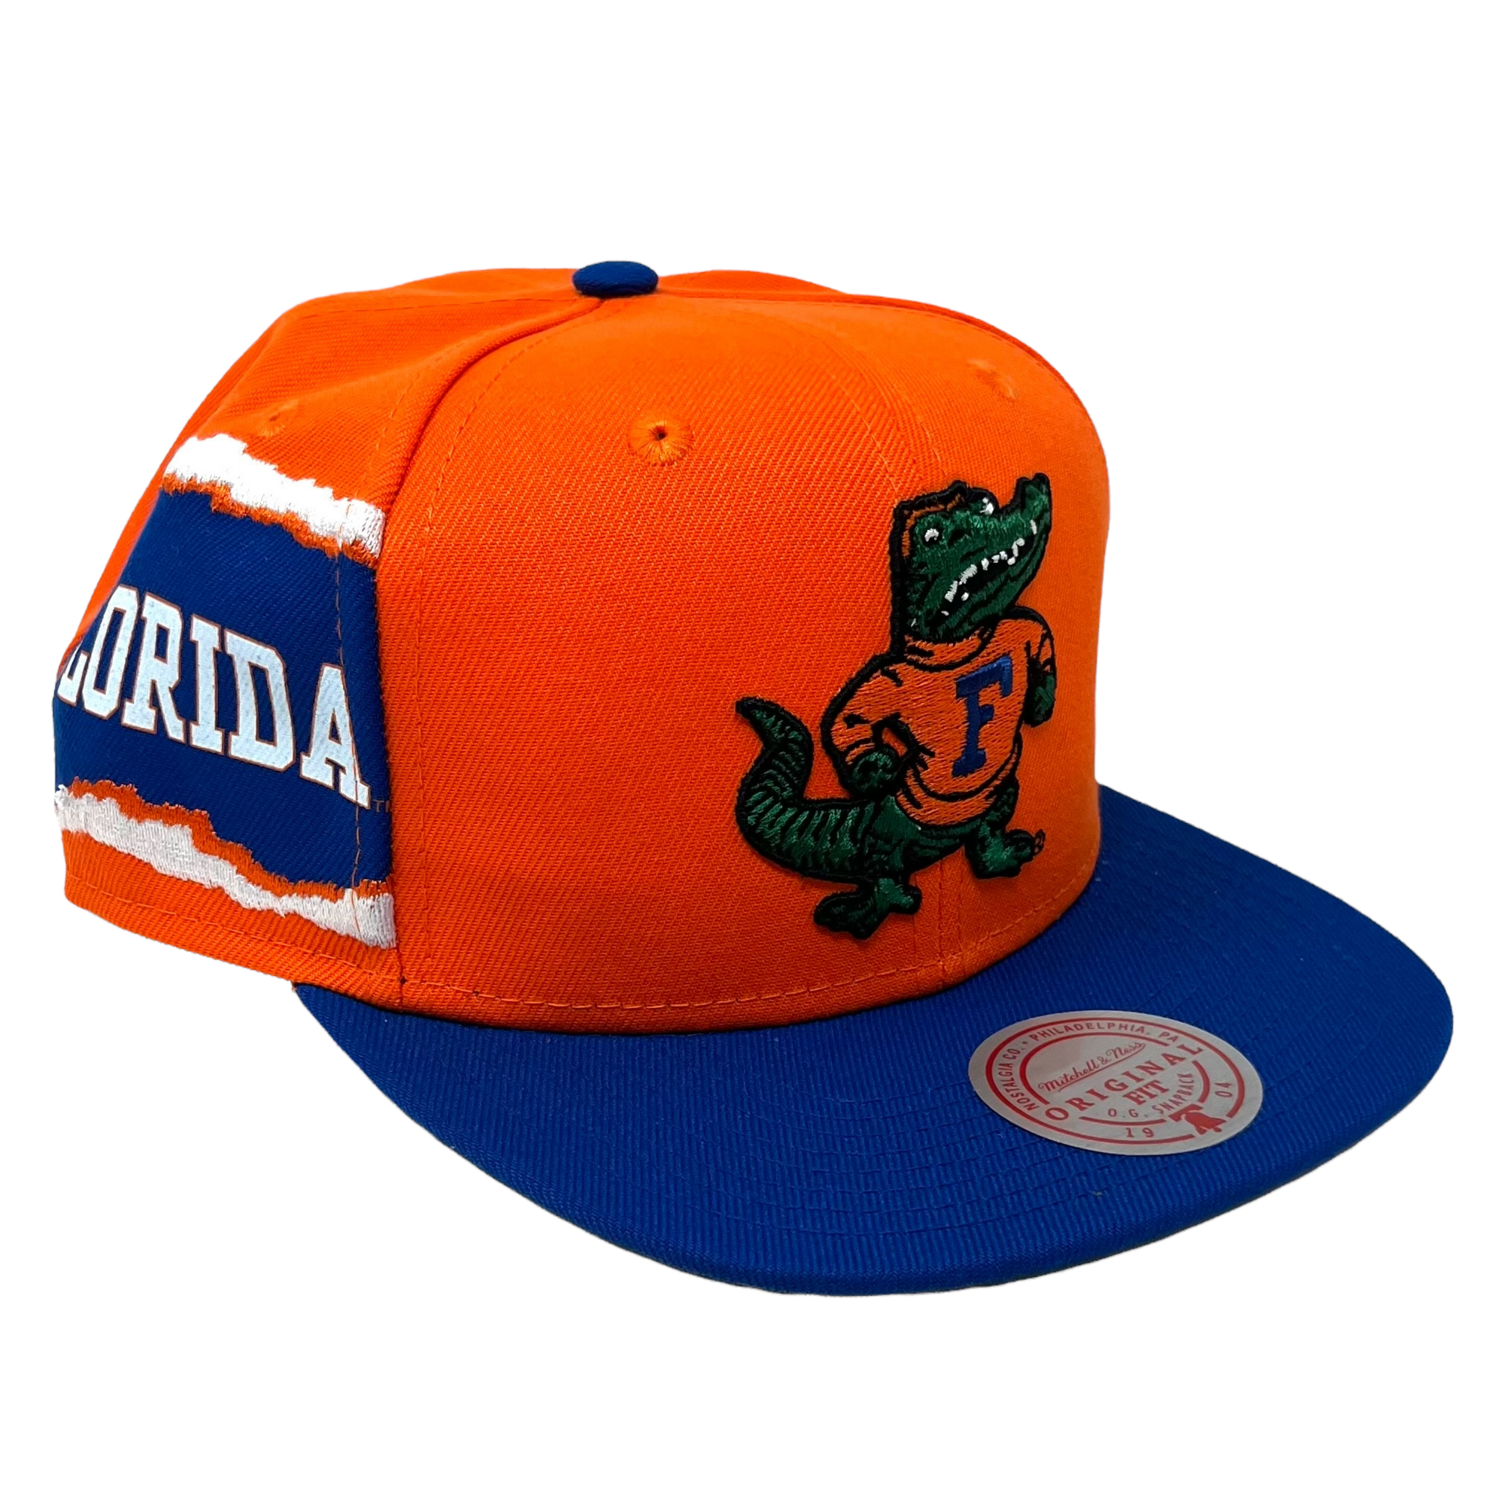 Mens Florida Hats, Florida Gators Caps, Beanie, Snapbacks